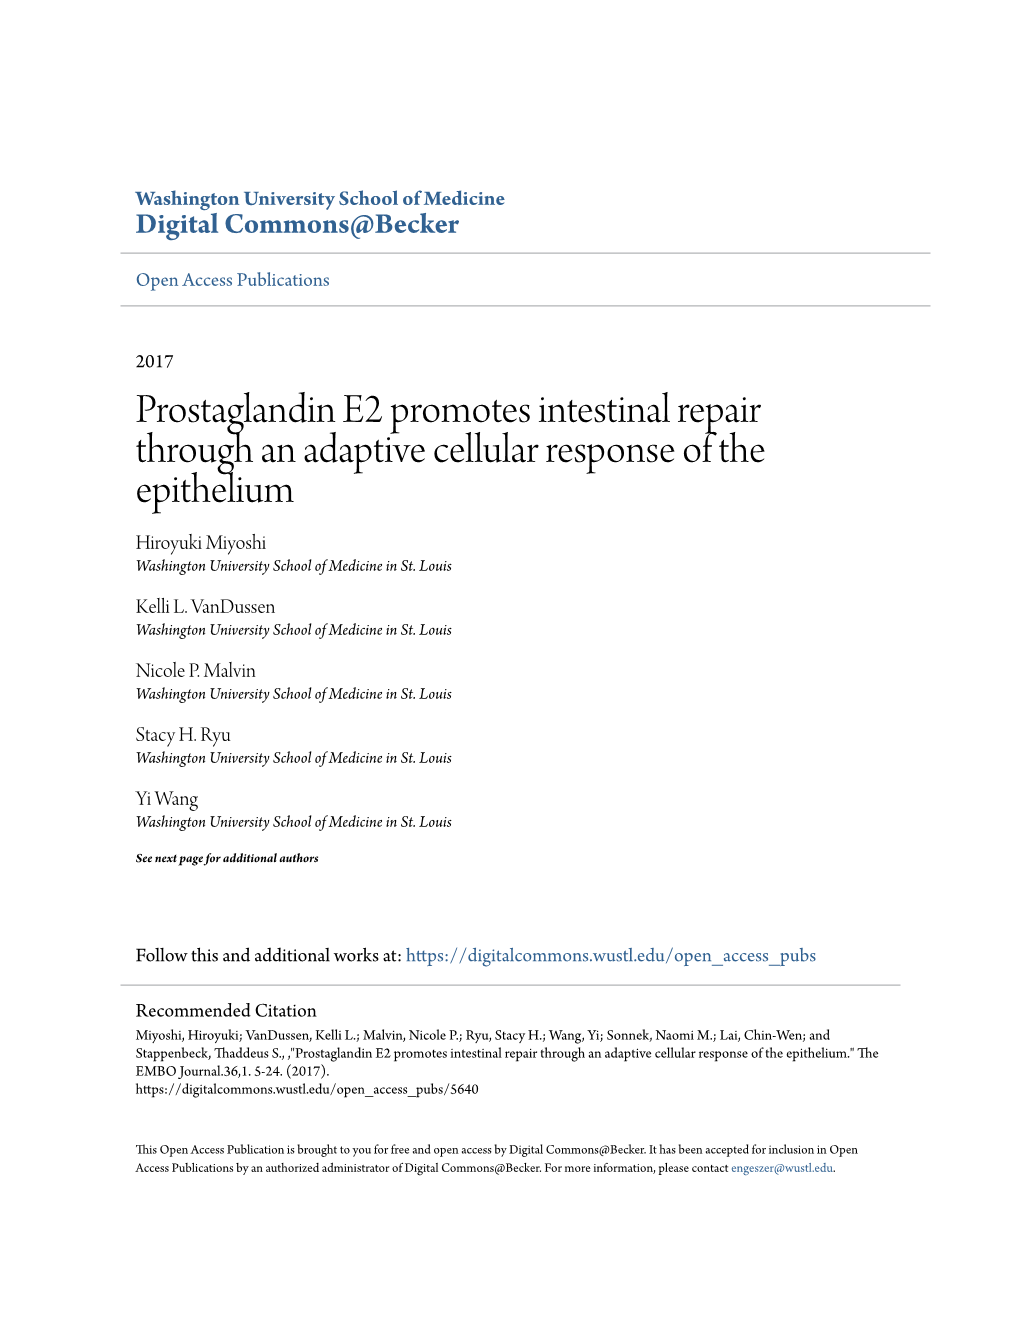 Prostaglandin E2 Promotes Intestinal Repair Through an Adaptive Cellular Response of the Epithelium Hiroyuki Miyoshi Washington University School of Medicine in St